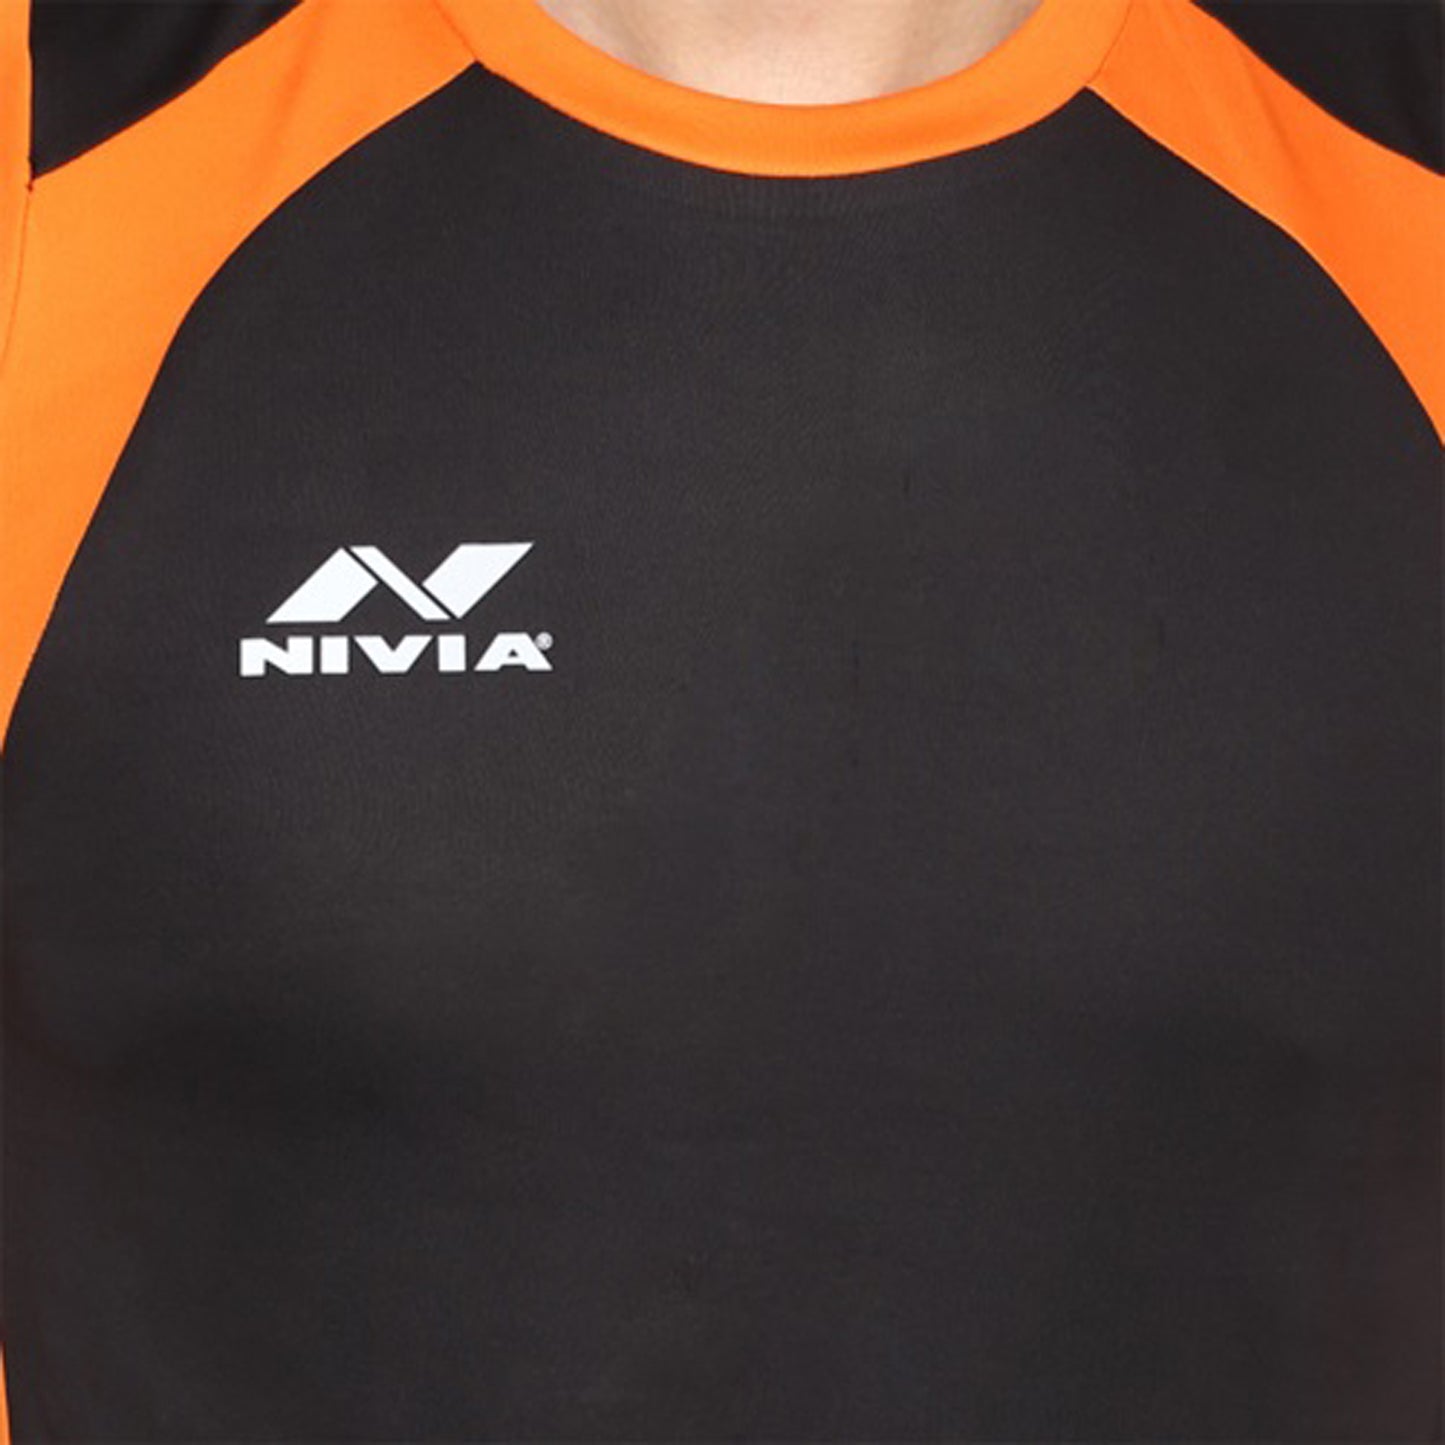 Nivia 2103 Phantom Jersey Set for Men, Black/Orange - Best Price online Prokicksports.com